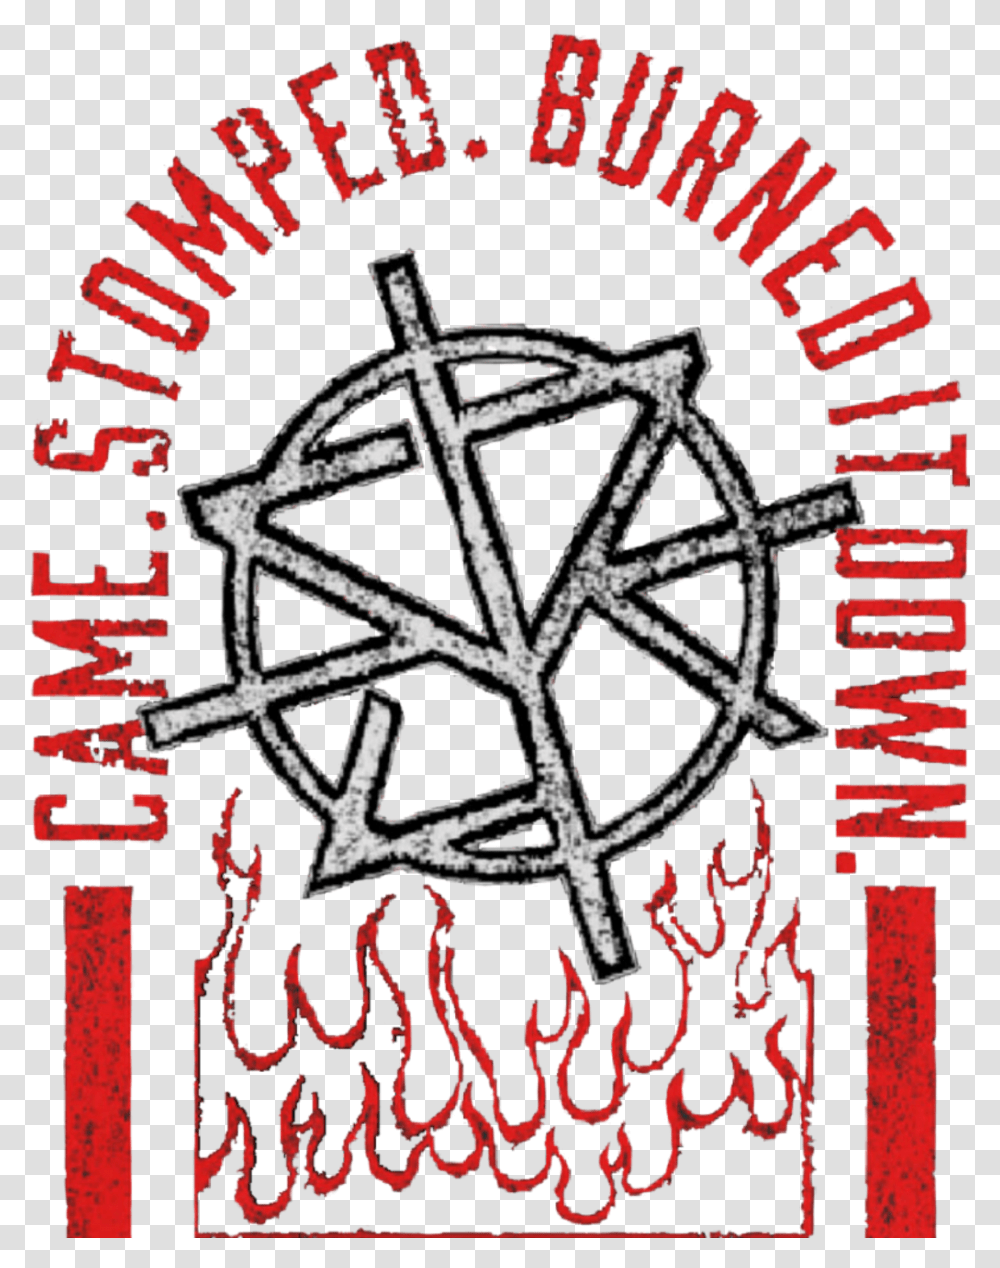 Sethrollins Tylerblack Colbylopez Burnitdown Thearchitect Emblem, Poster, Advertisement Transparent Png